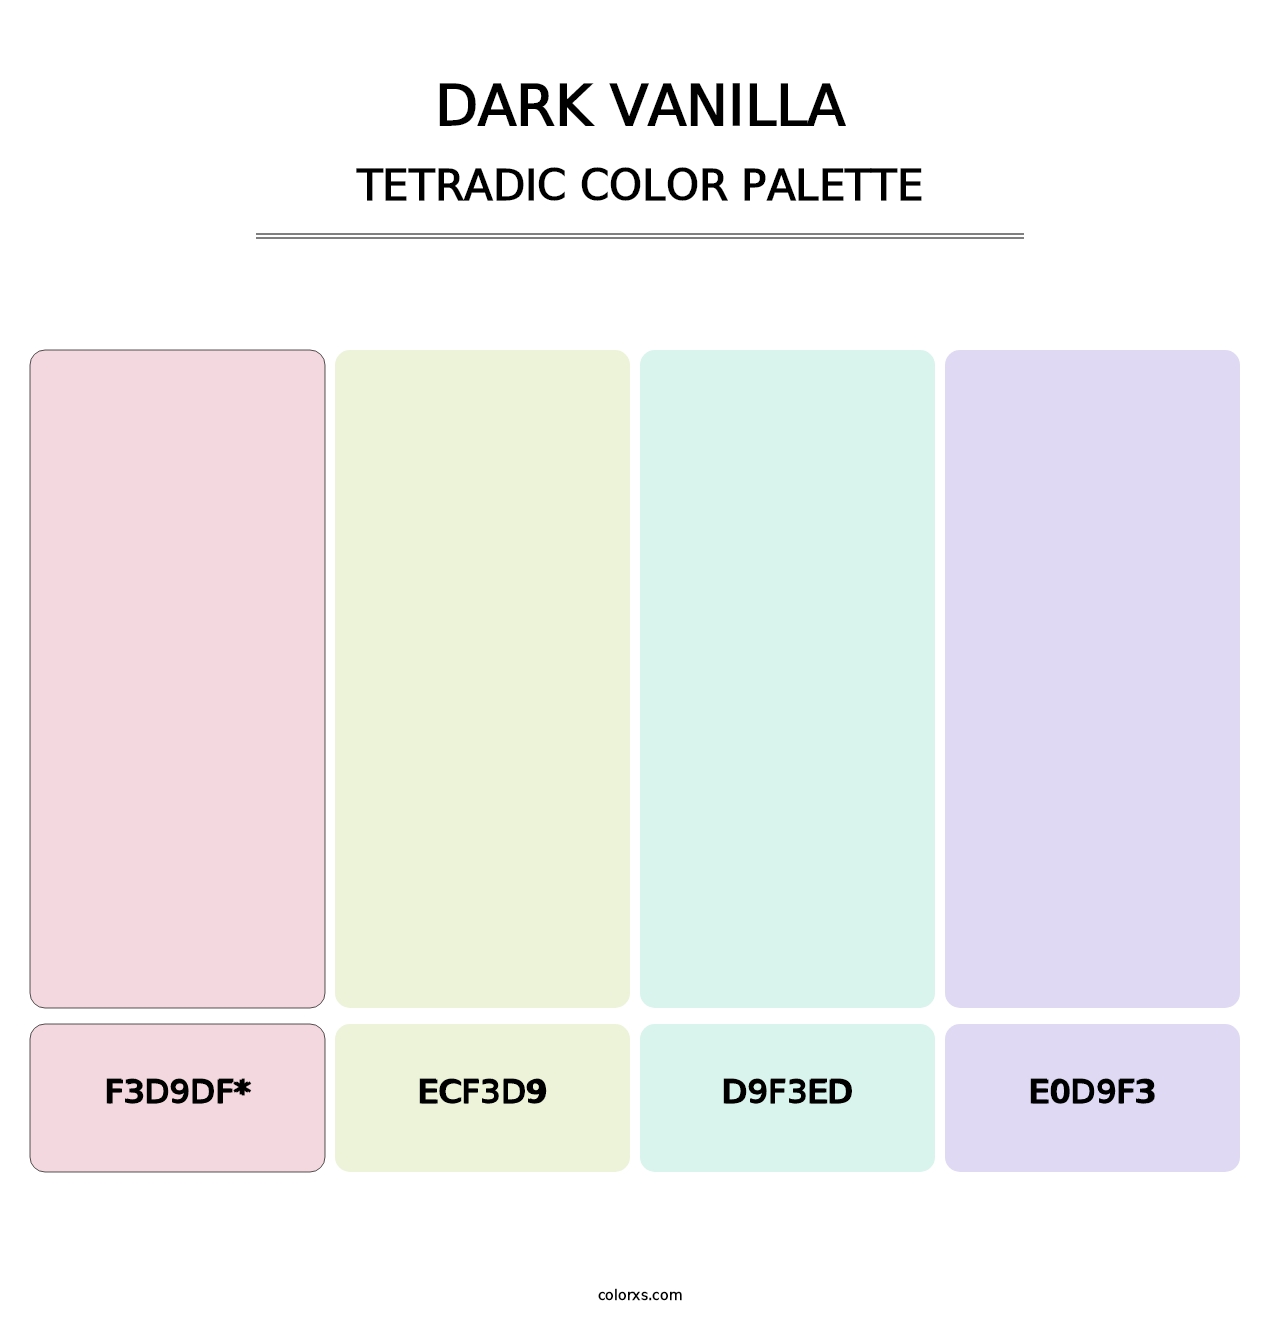 Dark Vanilla - Tetradic Color Palette